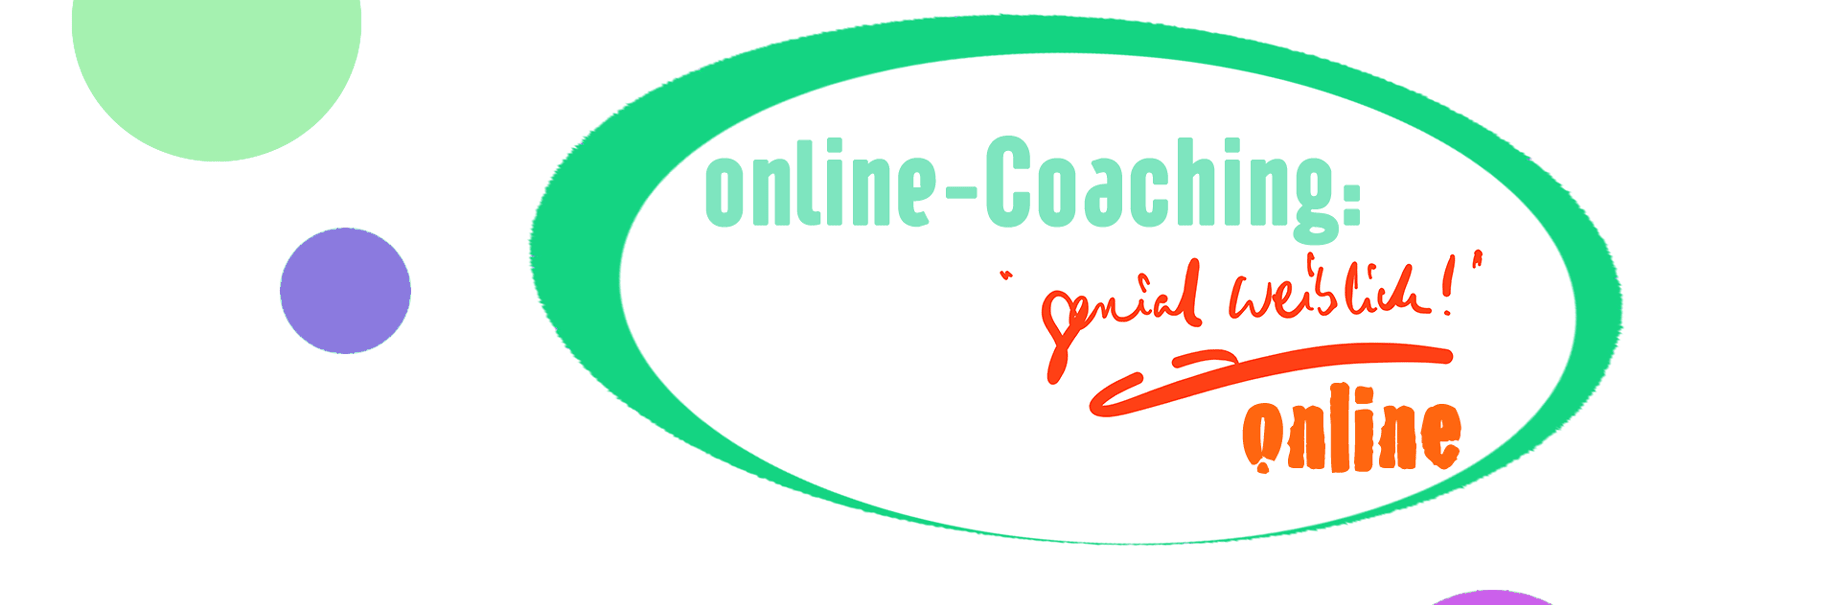 online-Coaching: "genial weiblich!" online